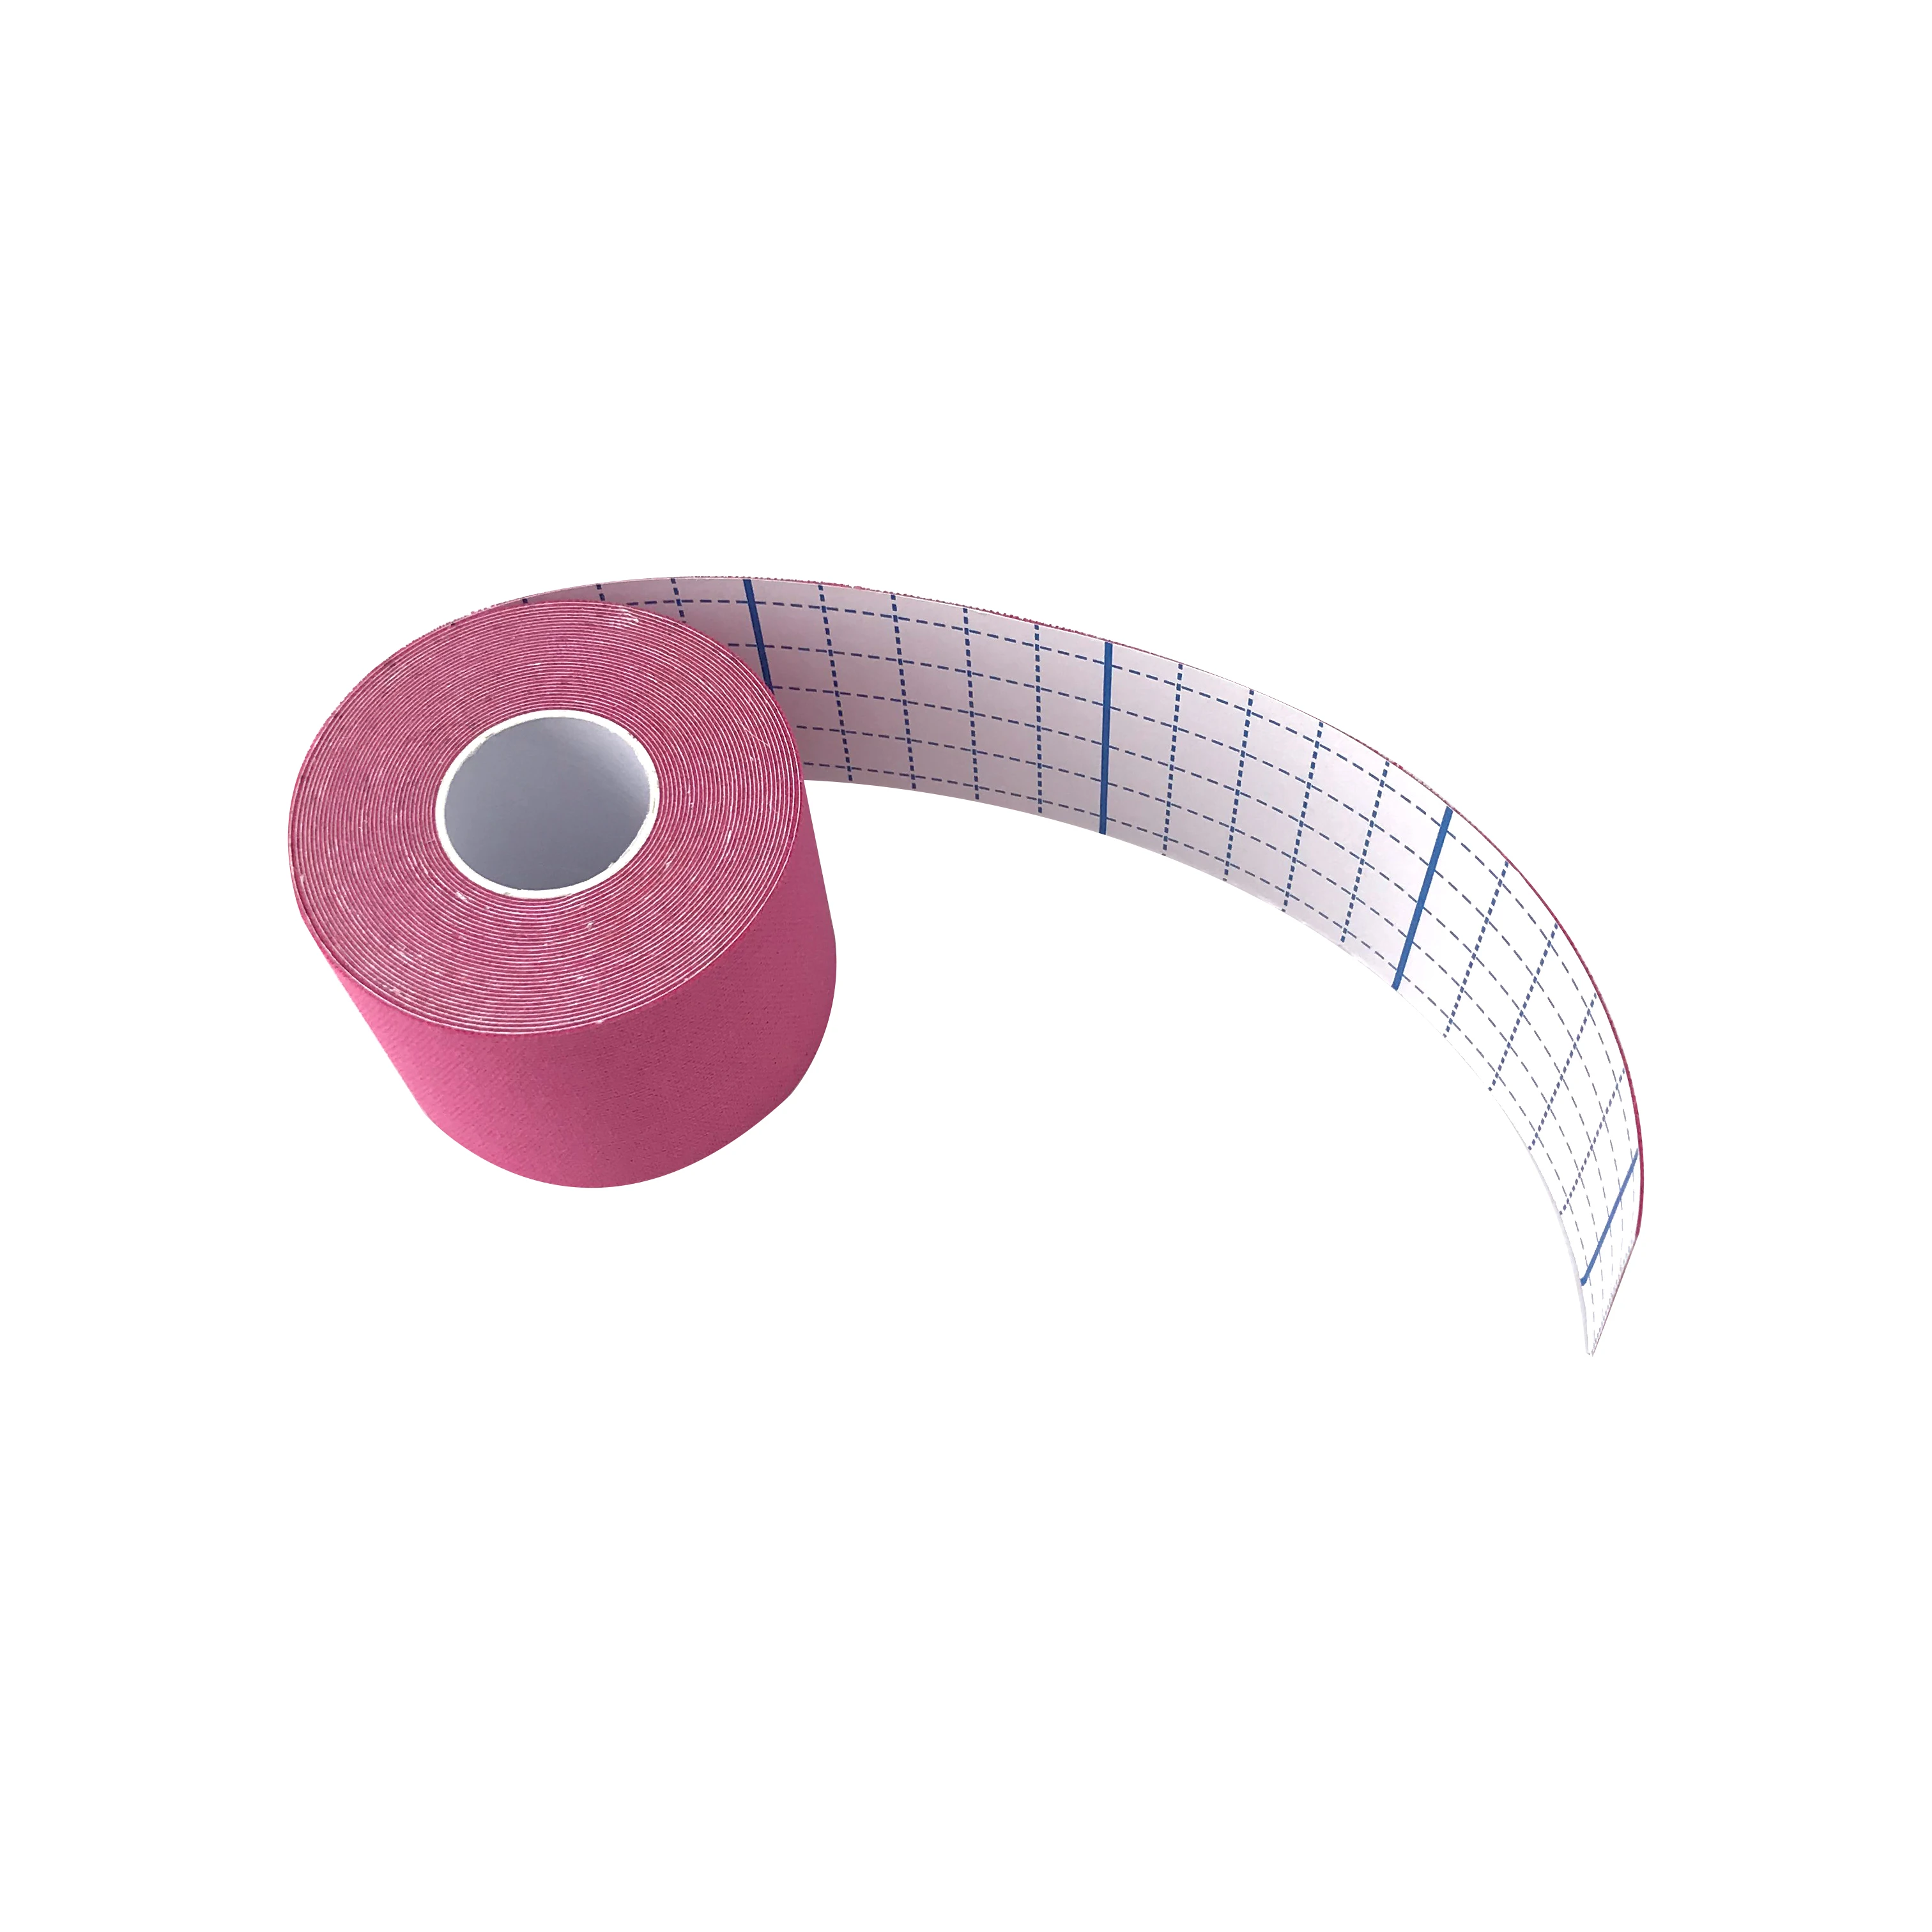 
5cm*5m sports tape rock tape self- cut kinesiology tape 